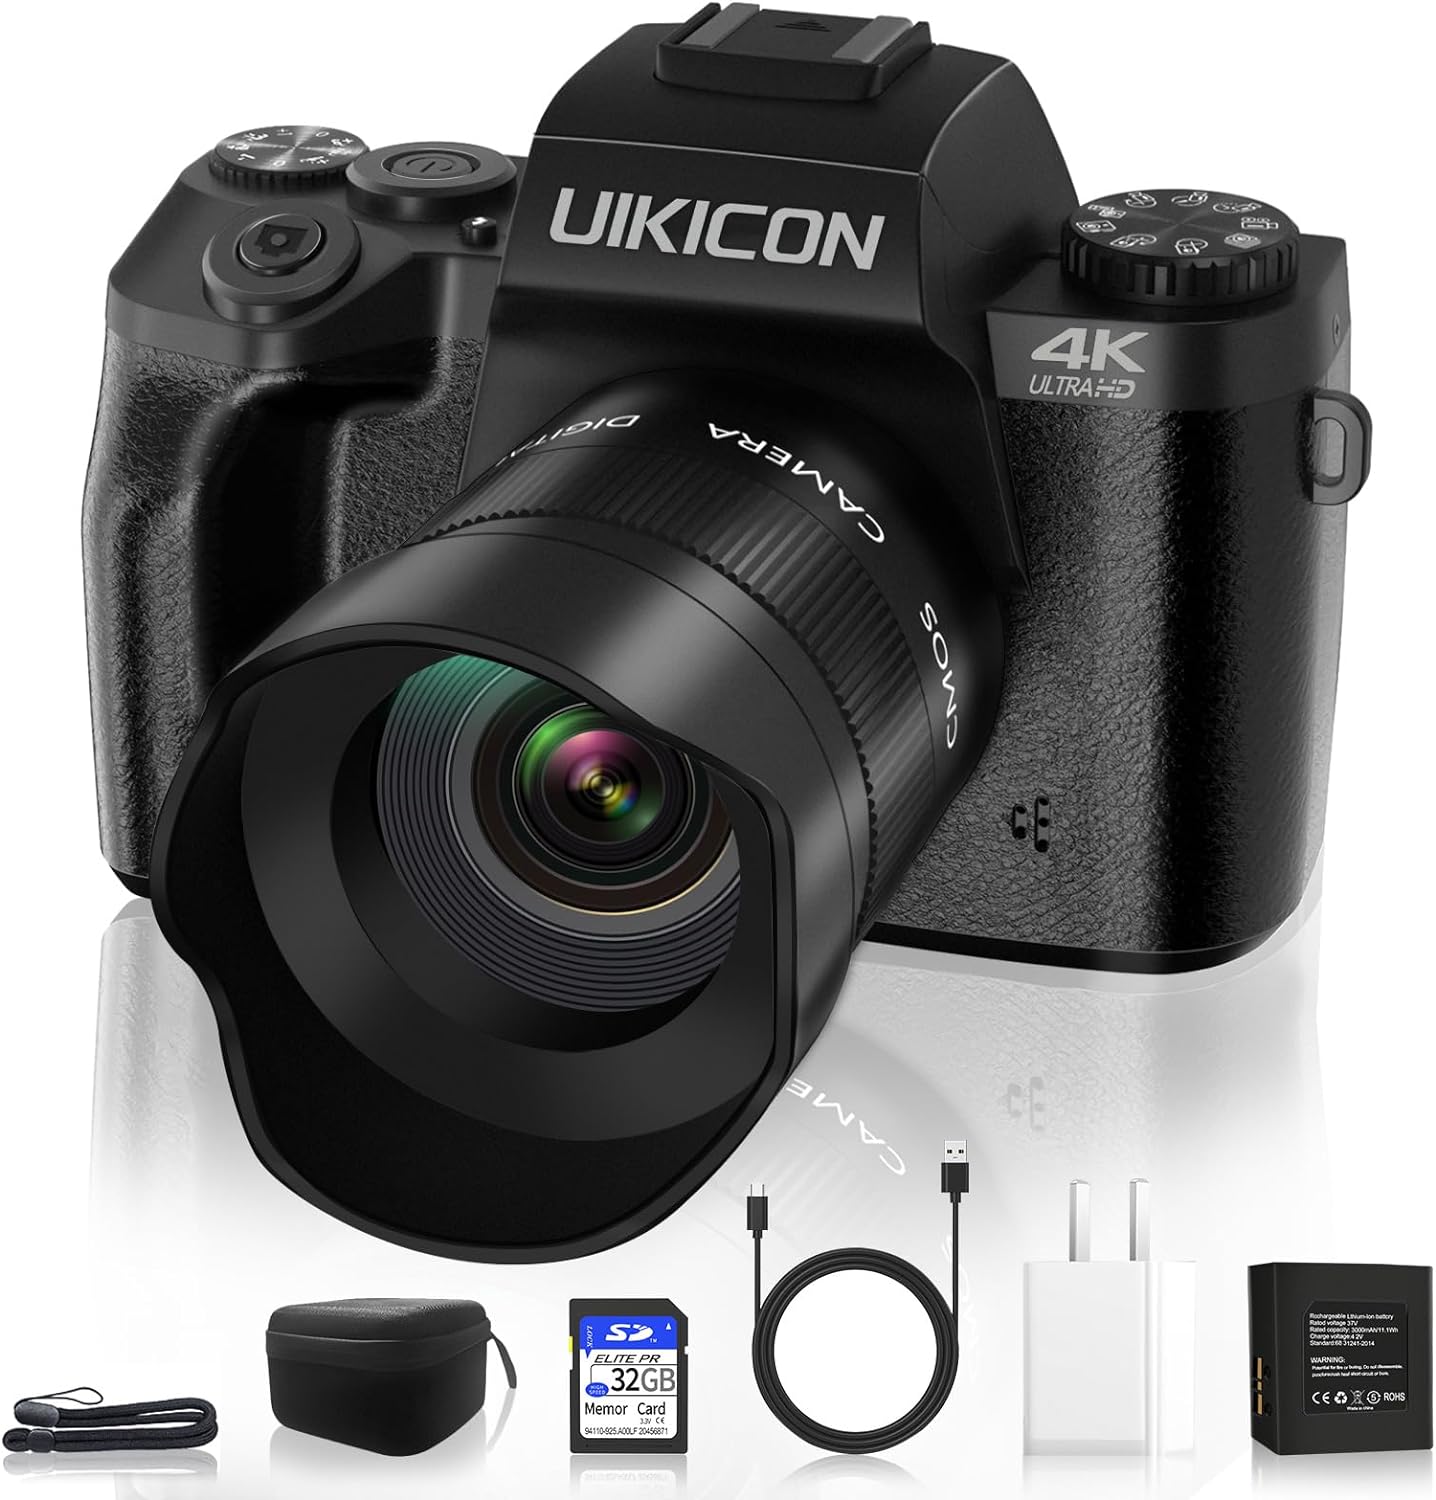 UIKICON 4K Digital Camera Review: A Beginner-Friendly and Versatile Option